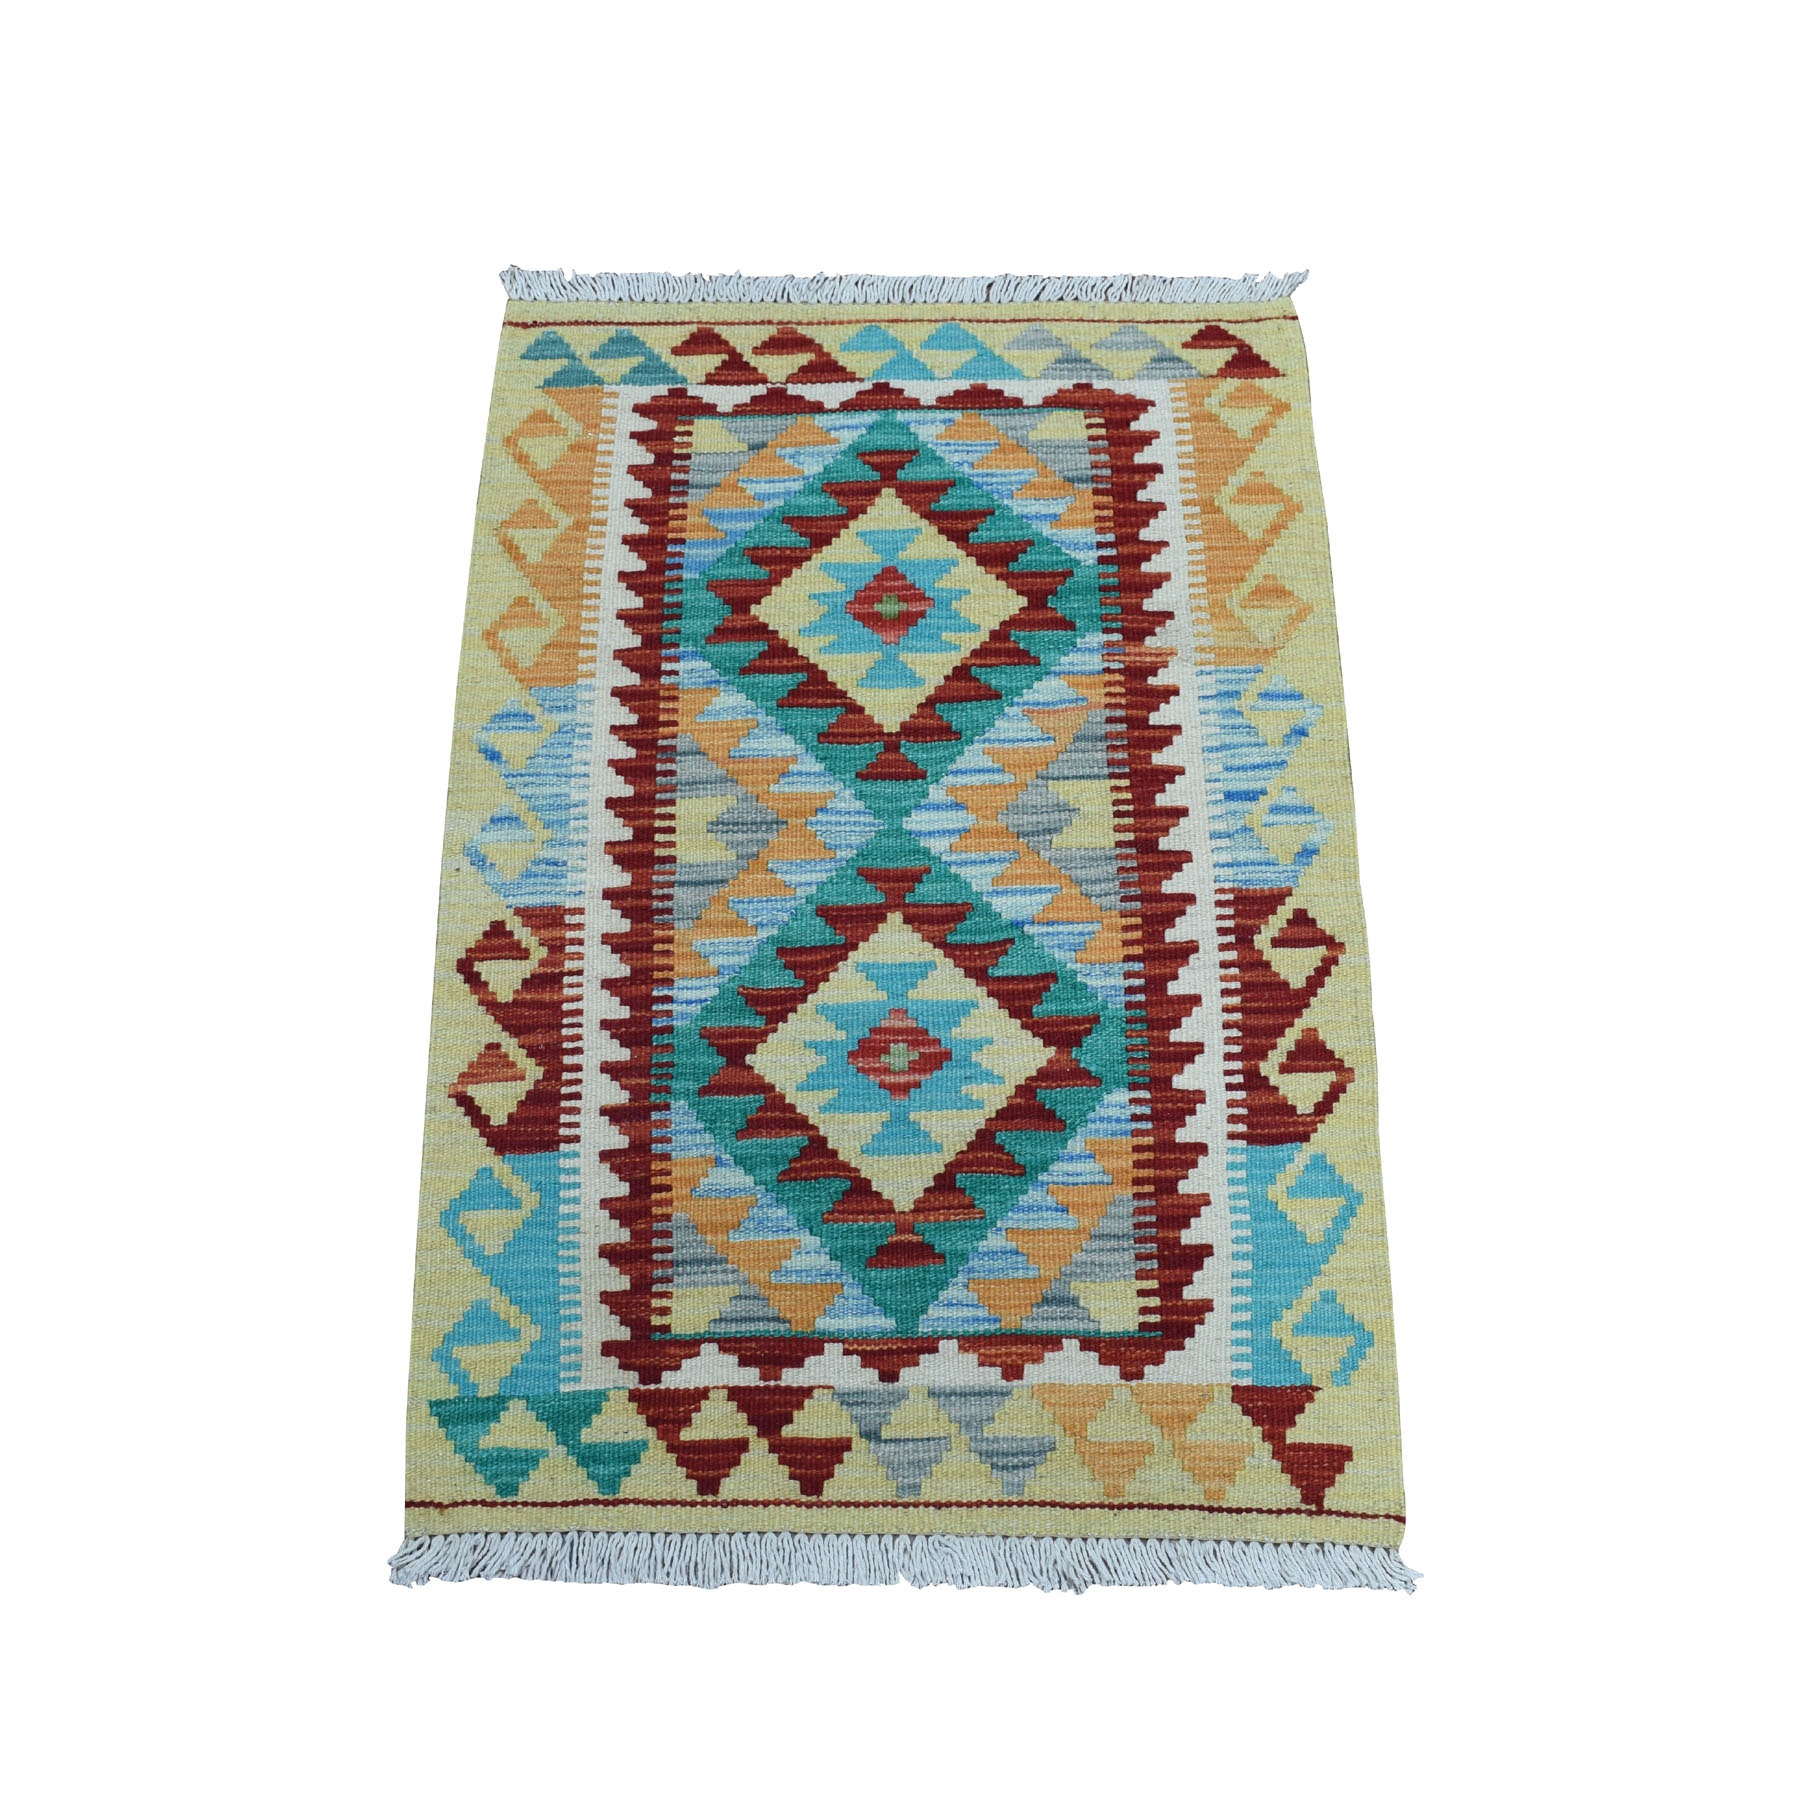 2'X2'9" Colorful Afghan Kilim Pure Wool Hand Woven Oriental Rug moaea98c